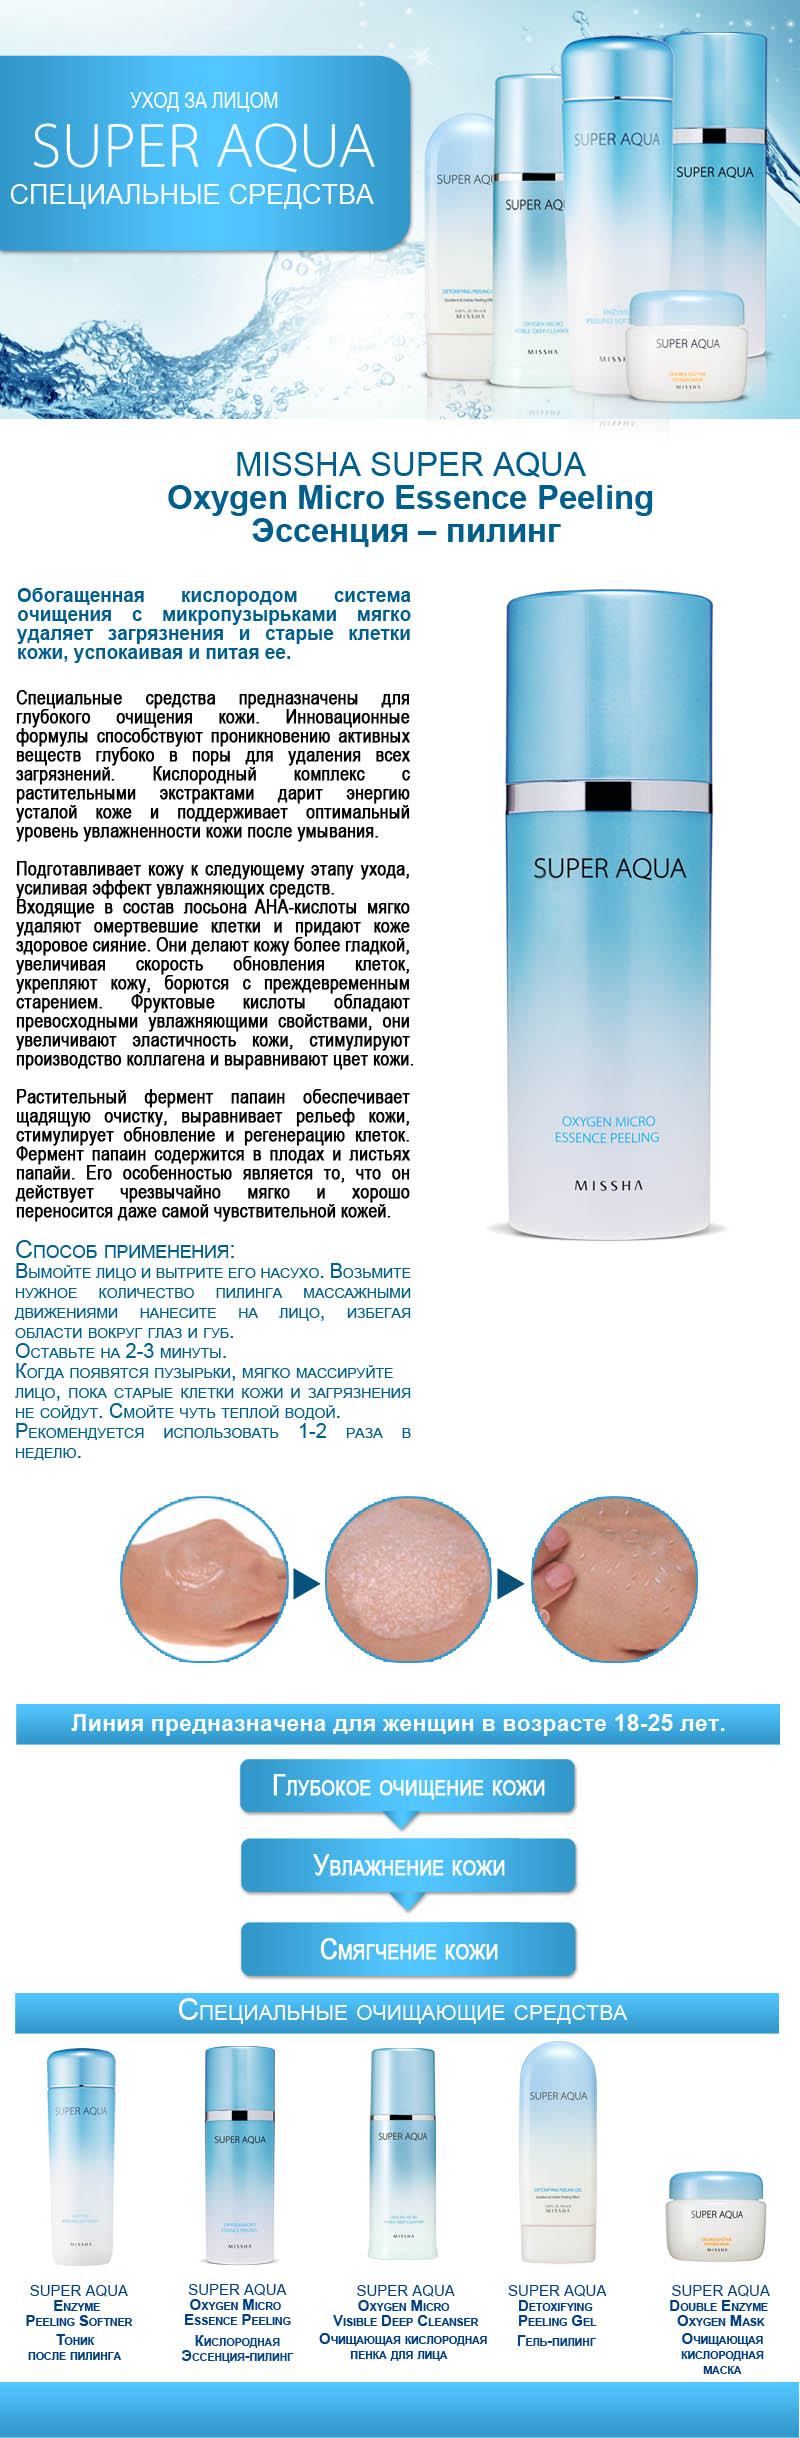 Super Aqua Oxygen Micro Essence Peeling_ru